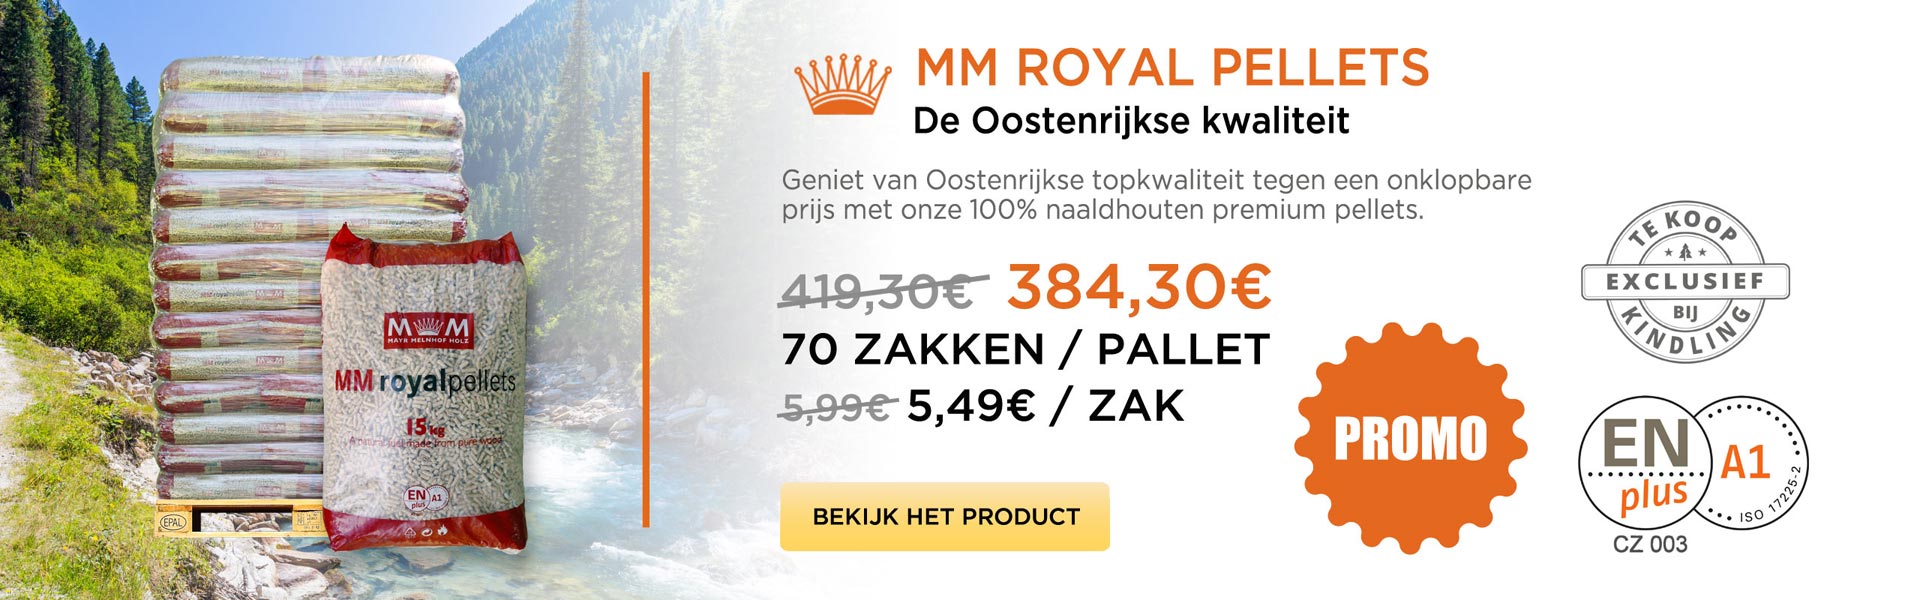 royal pellets promo nl